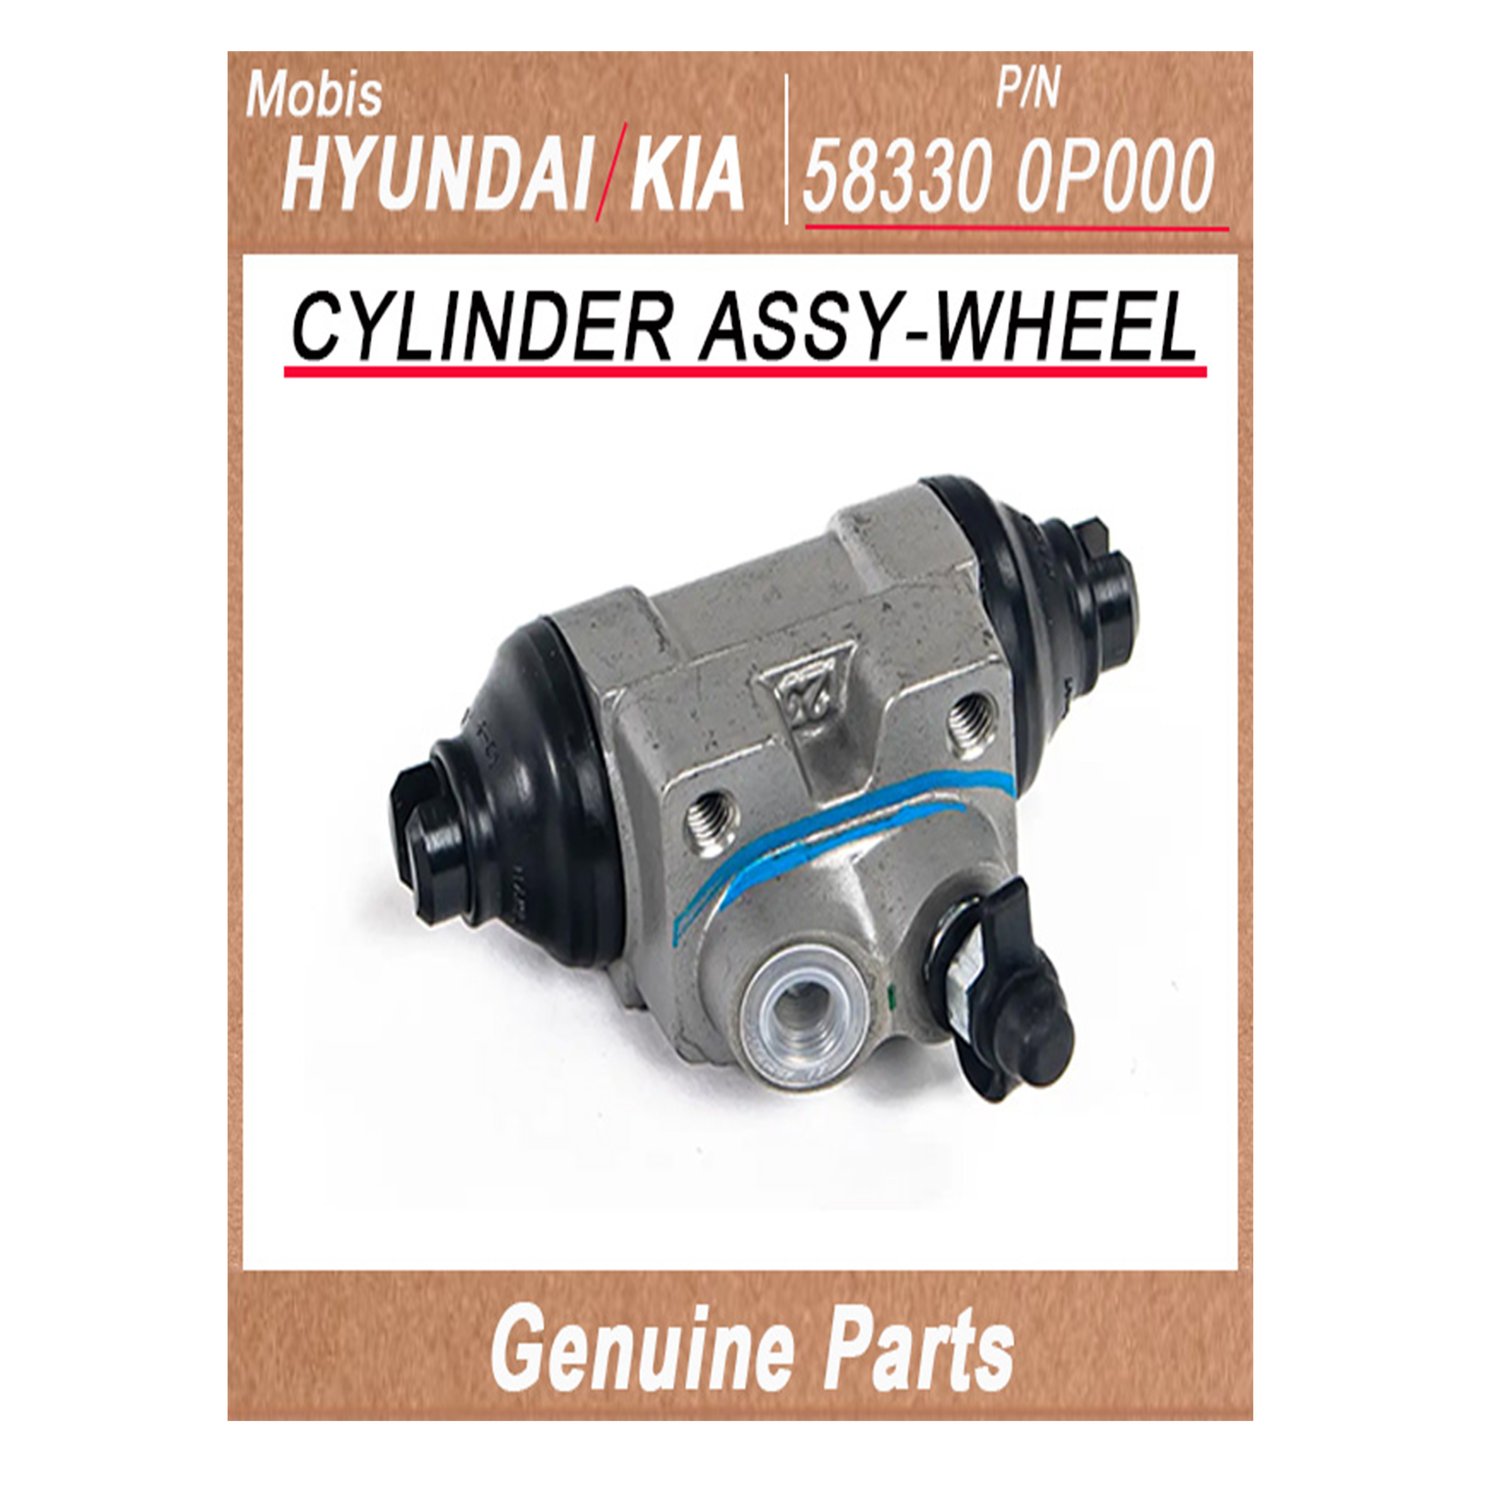 583300P000 _ CYLINDER ASSY_WHEEL _ Genuine Korean Automotive Spare Parts _ Hyundai Kia _Mobis_